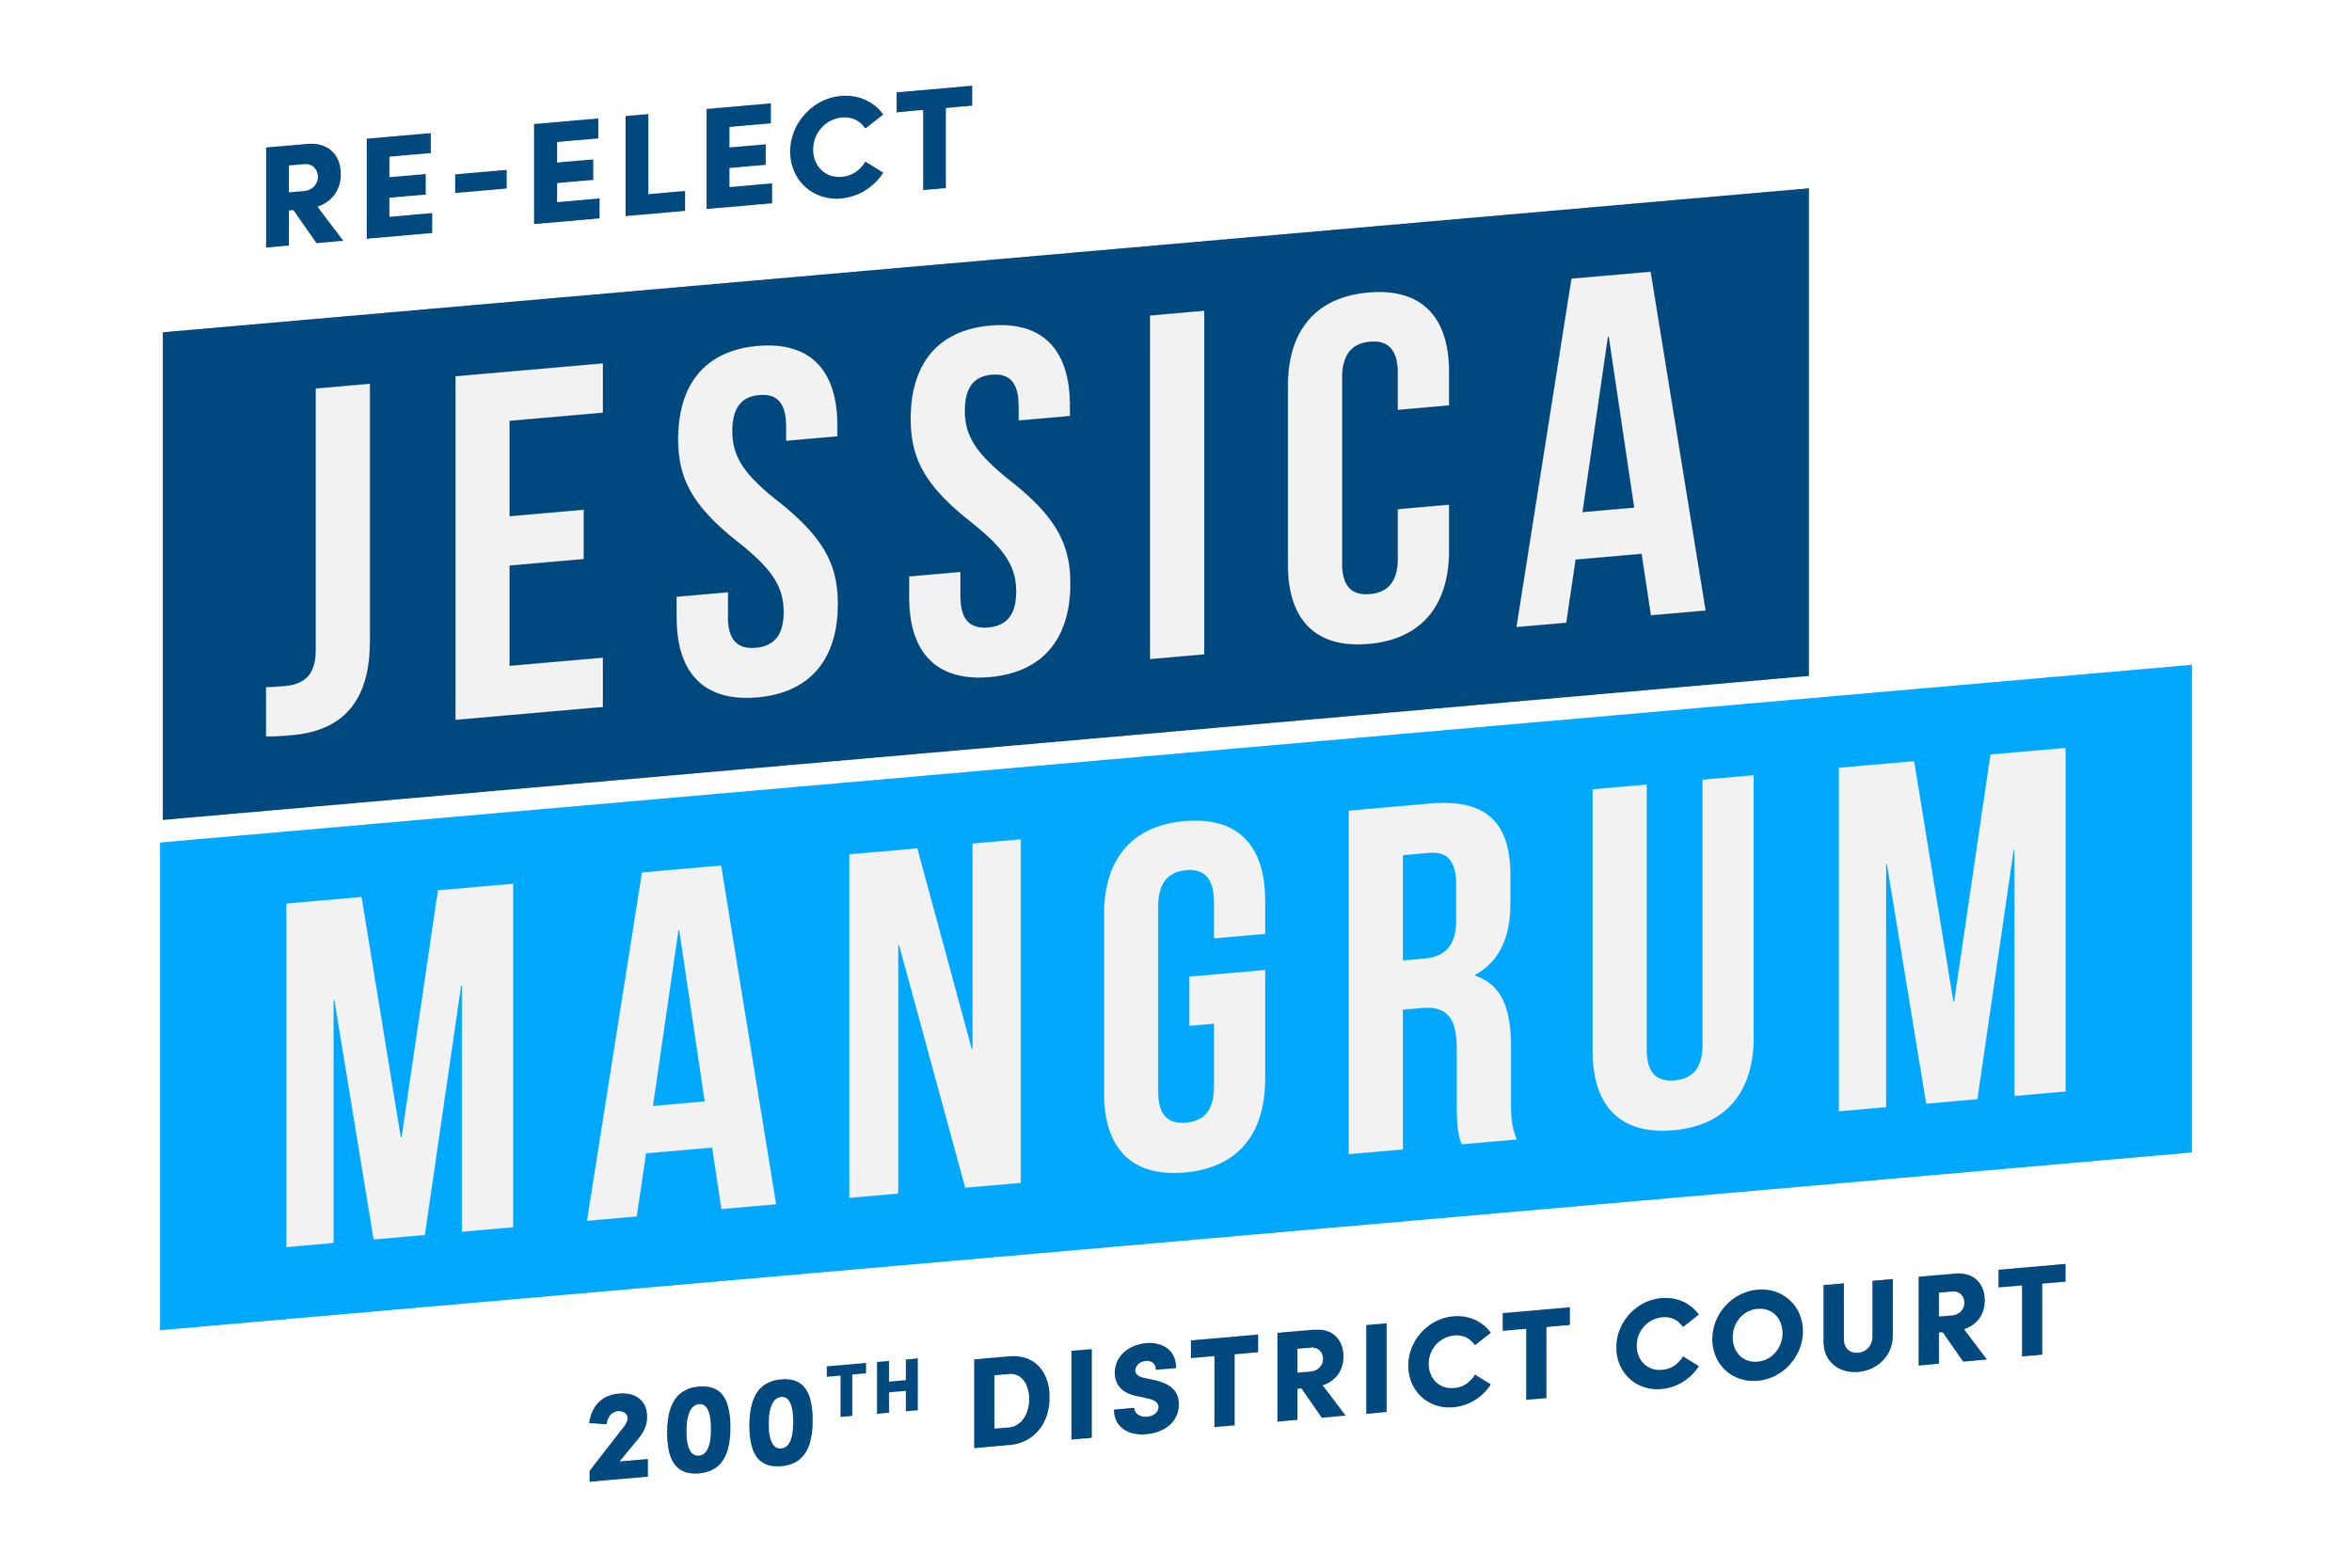 Judge Jessica Mangrum